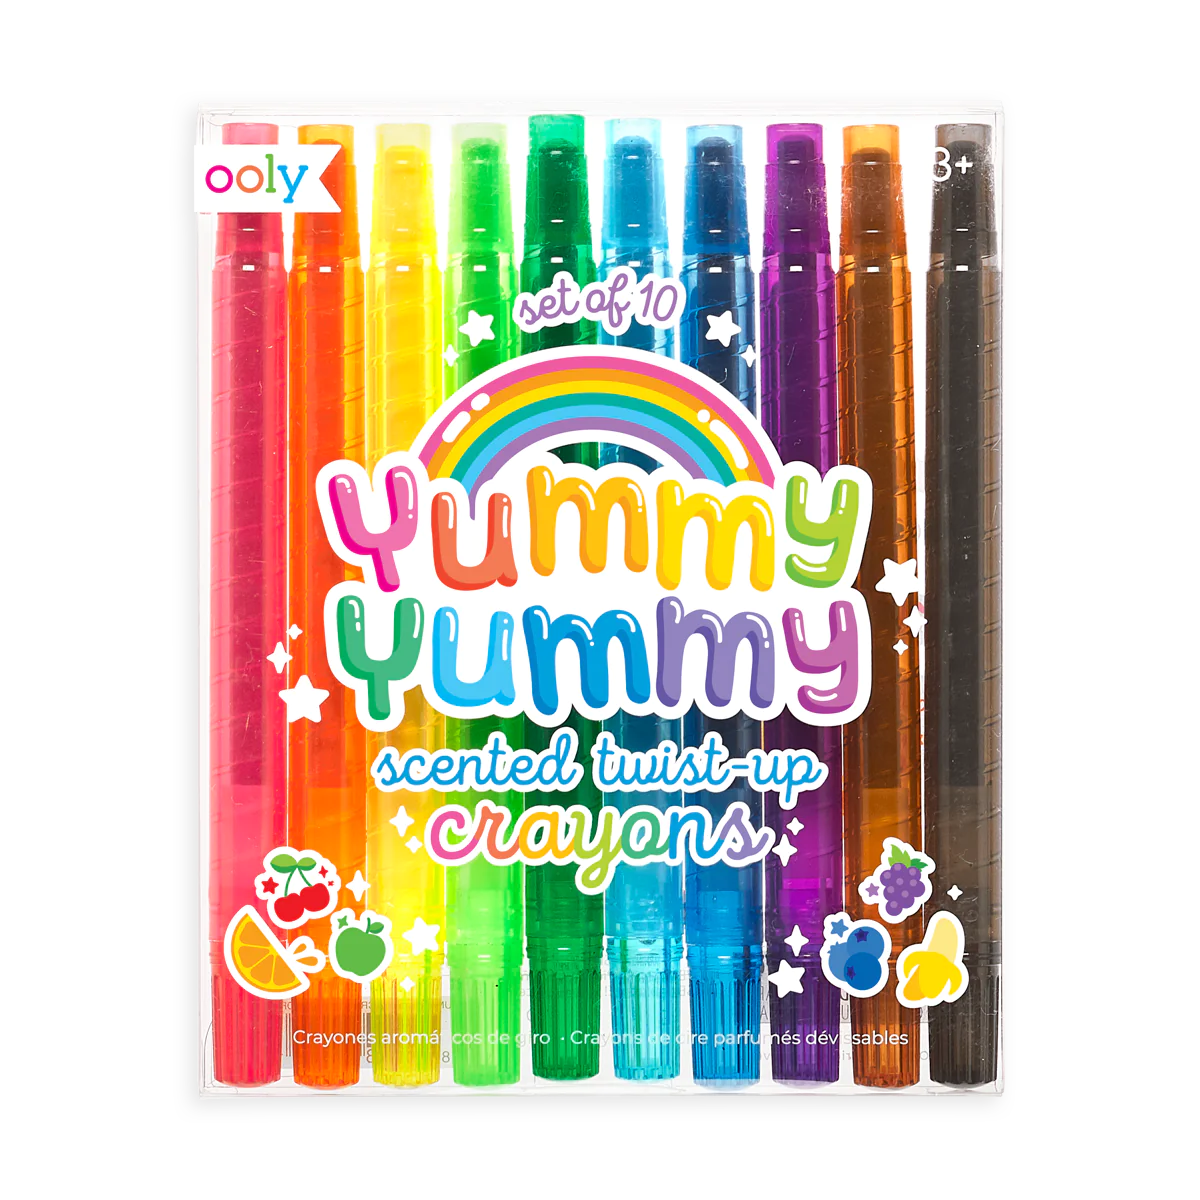 Yummy Yummy Scented Twist Up Crayons